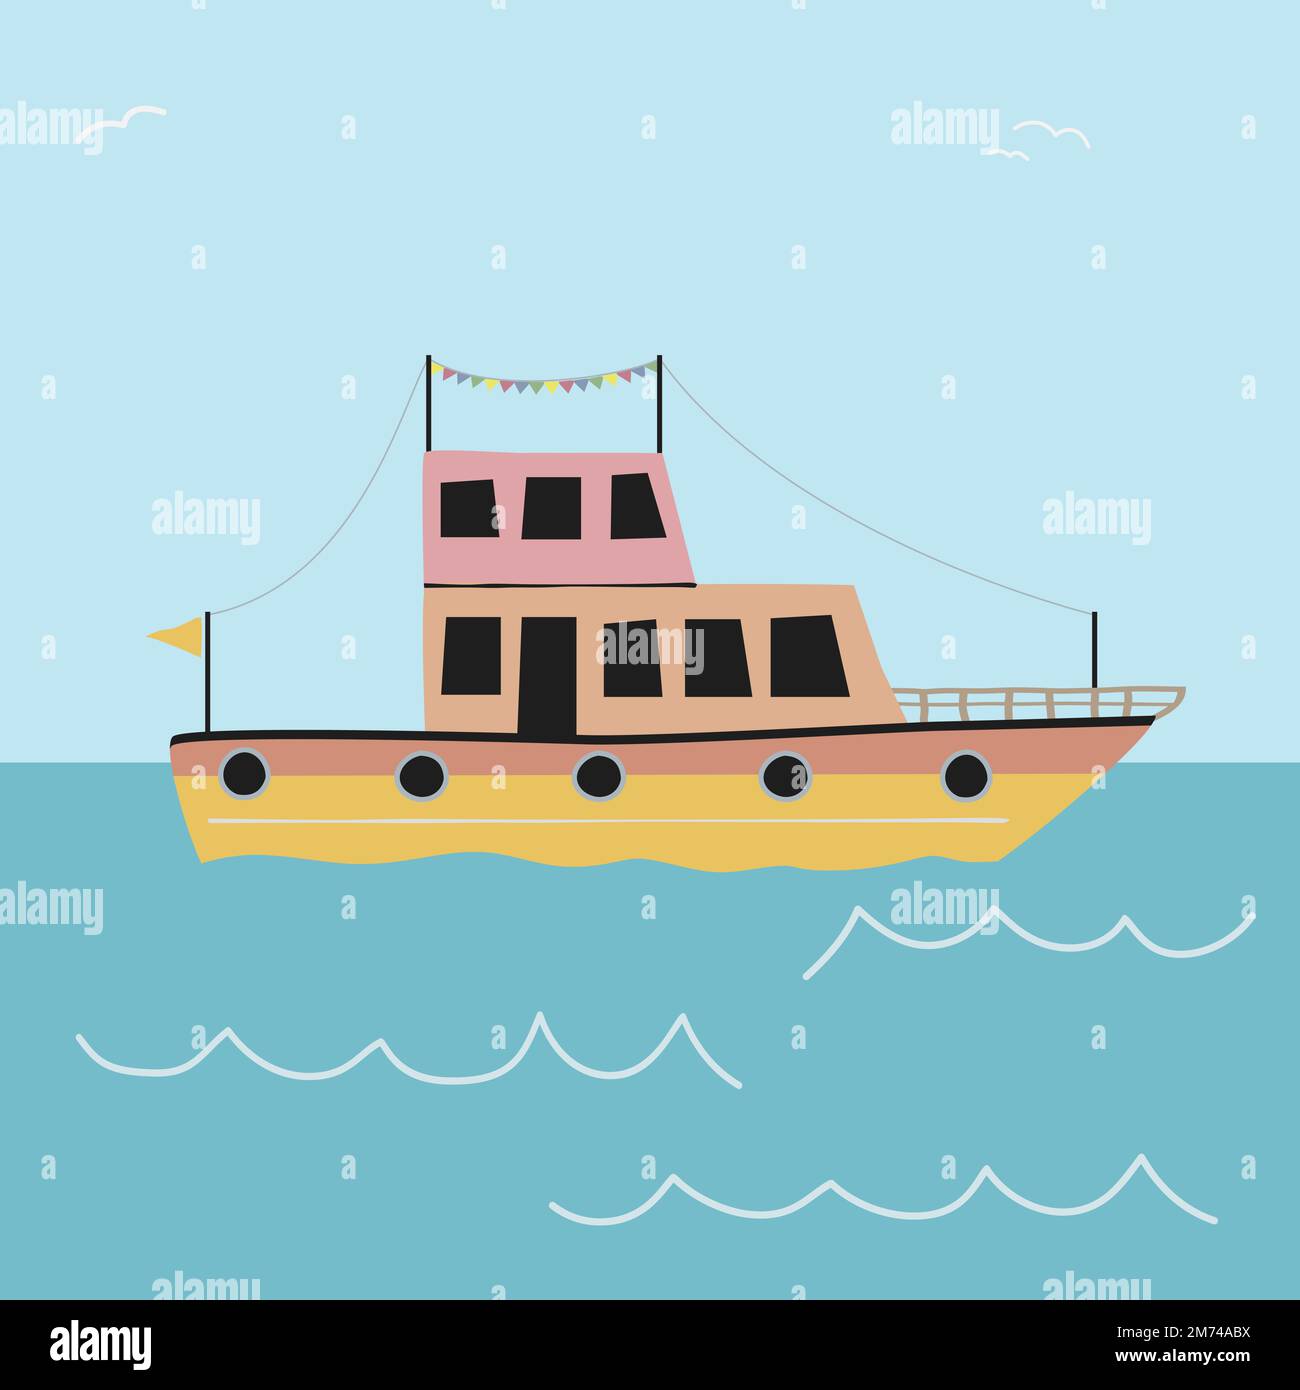 scandinavian style illustration of motor yacht on blue sea, scandi vector drawing for children Stock Vector